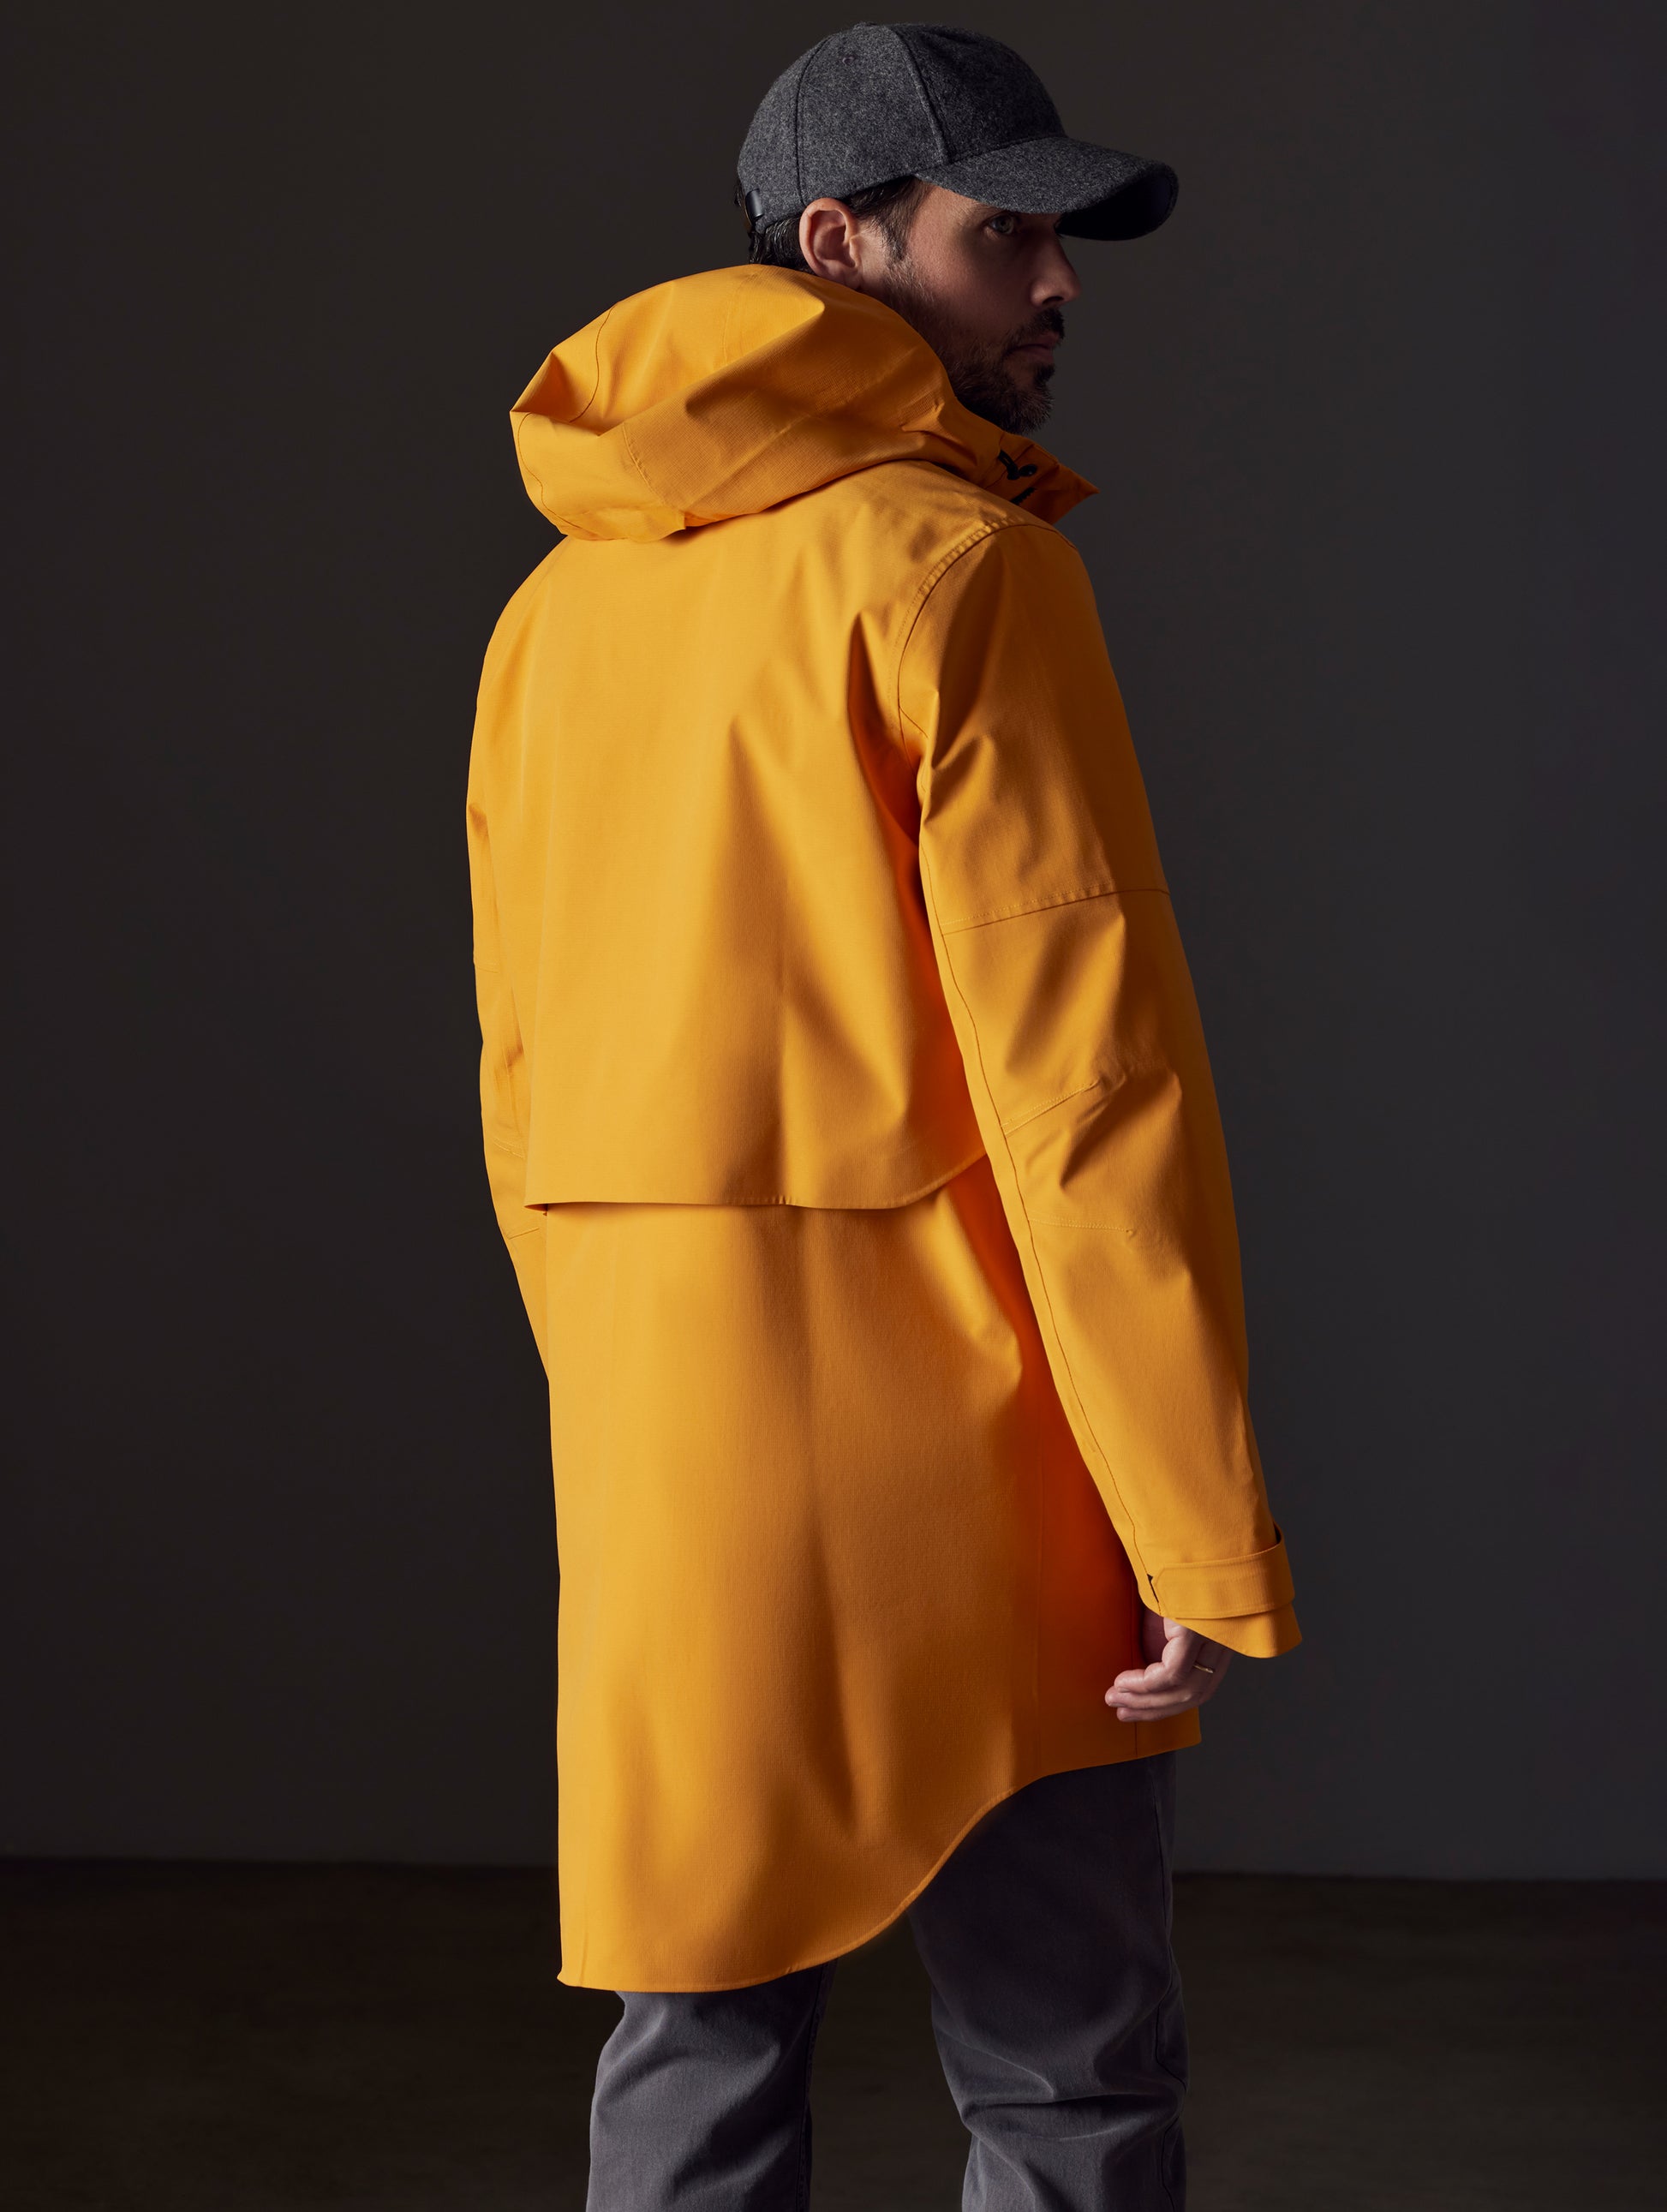 Man wearing orange rain jacket from AETHER Apparel